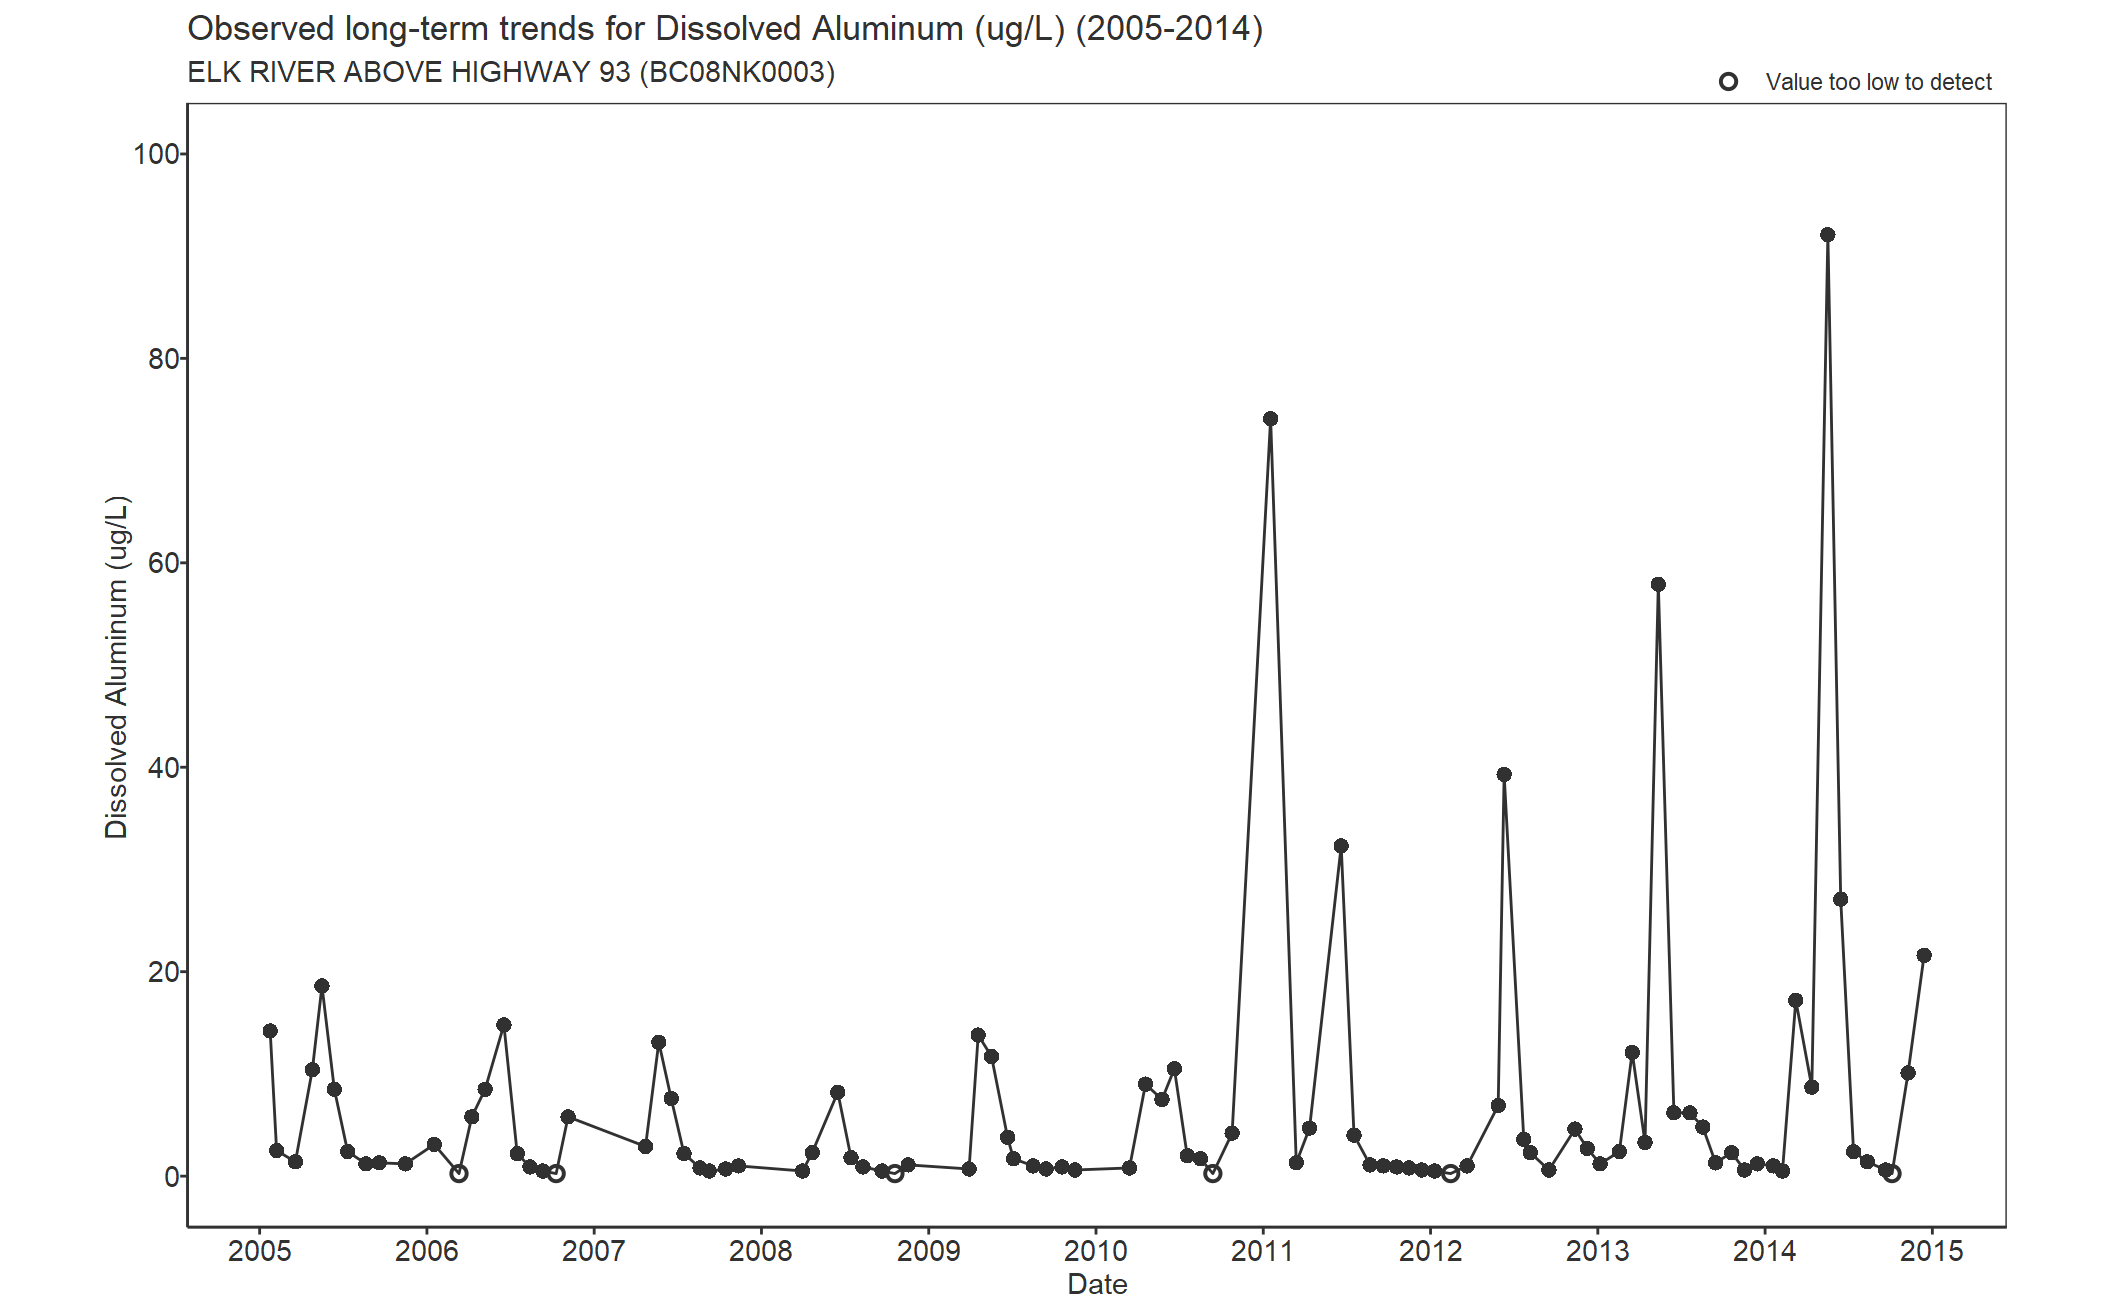 Observed long-term trends for Aluminum Dissolved (2005-2014)